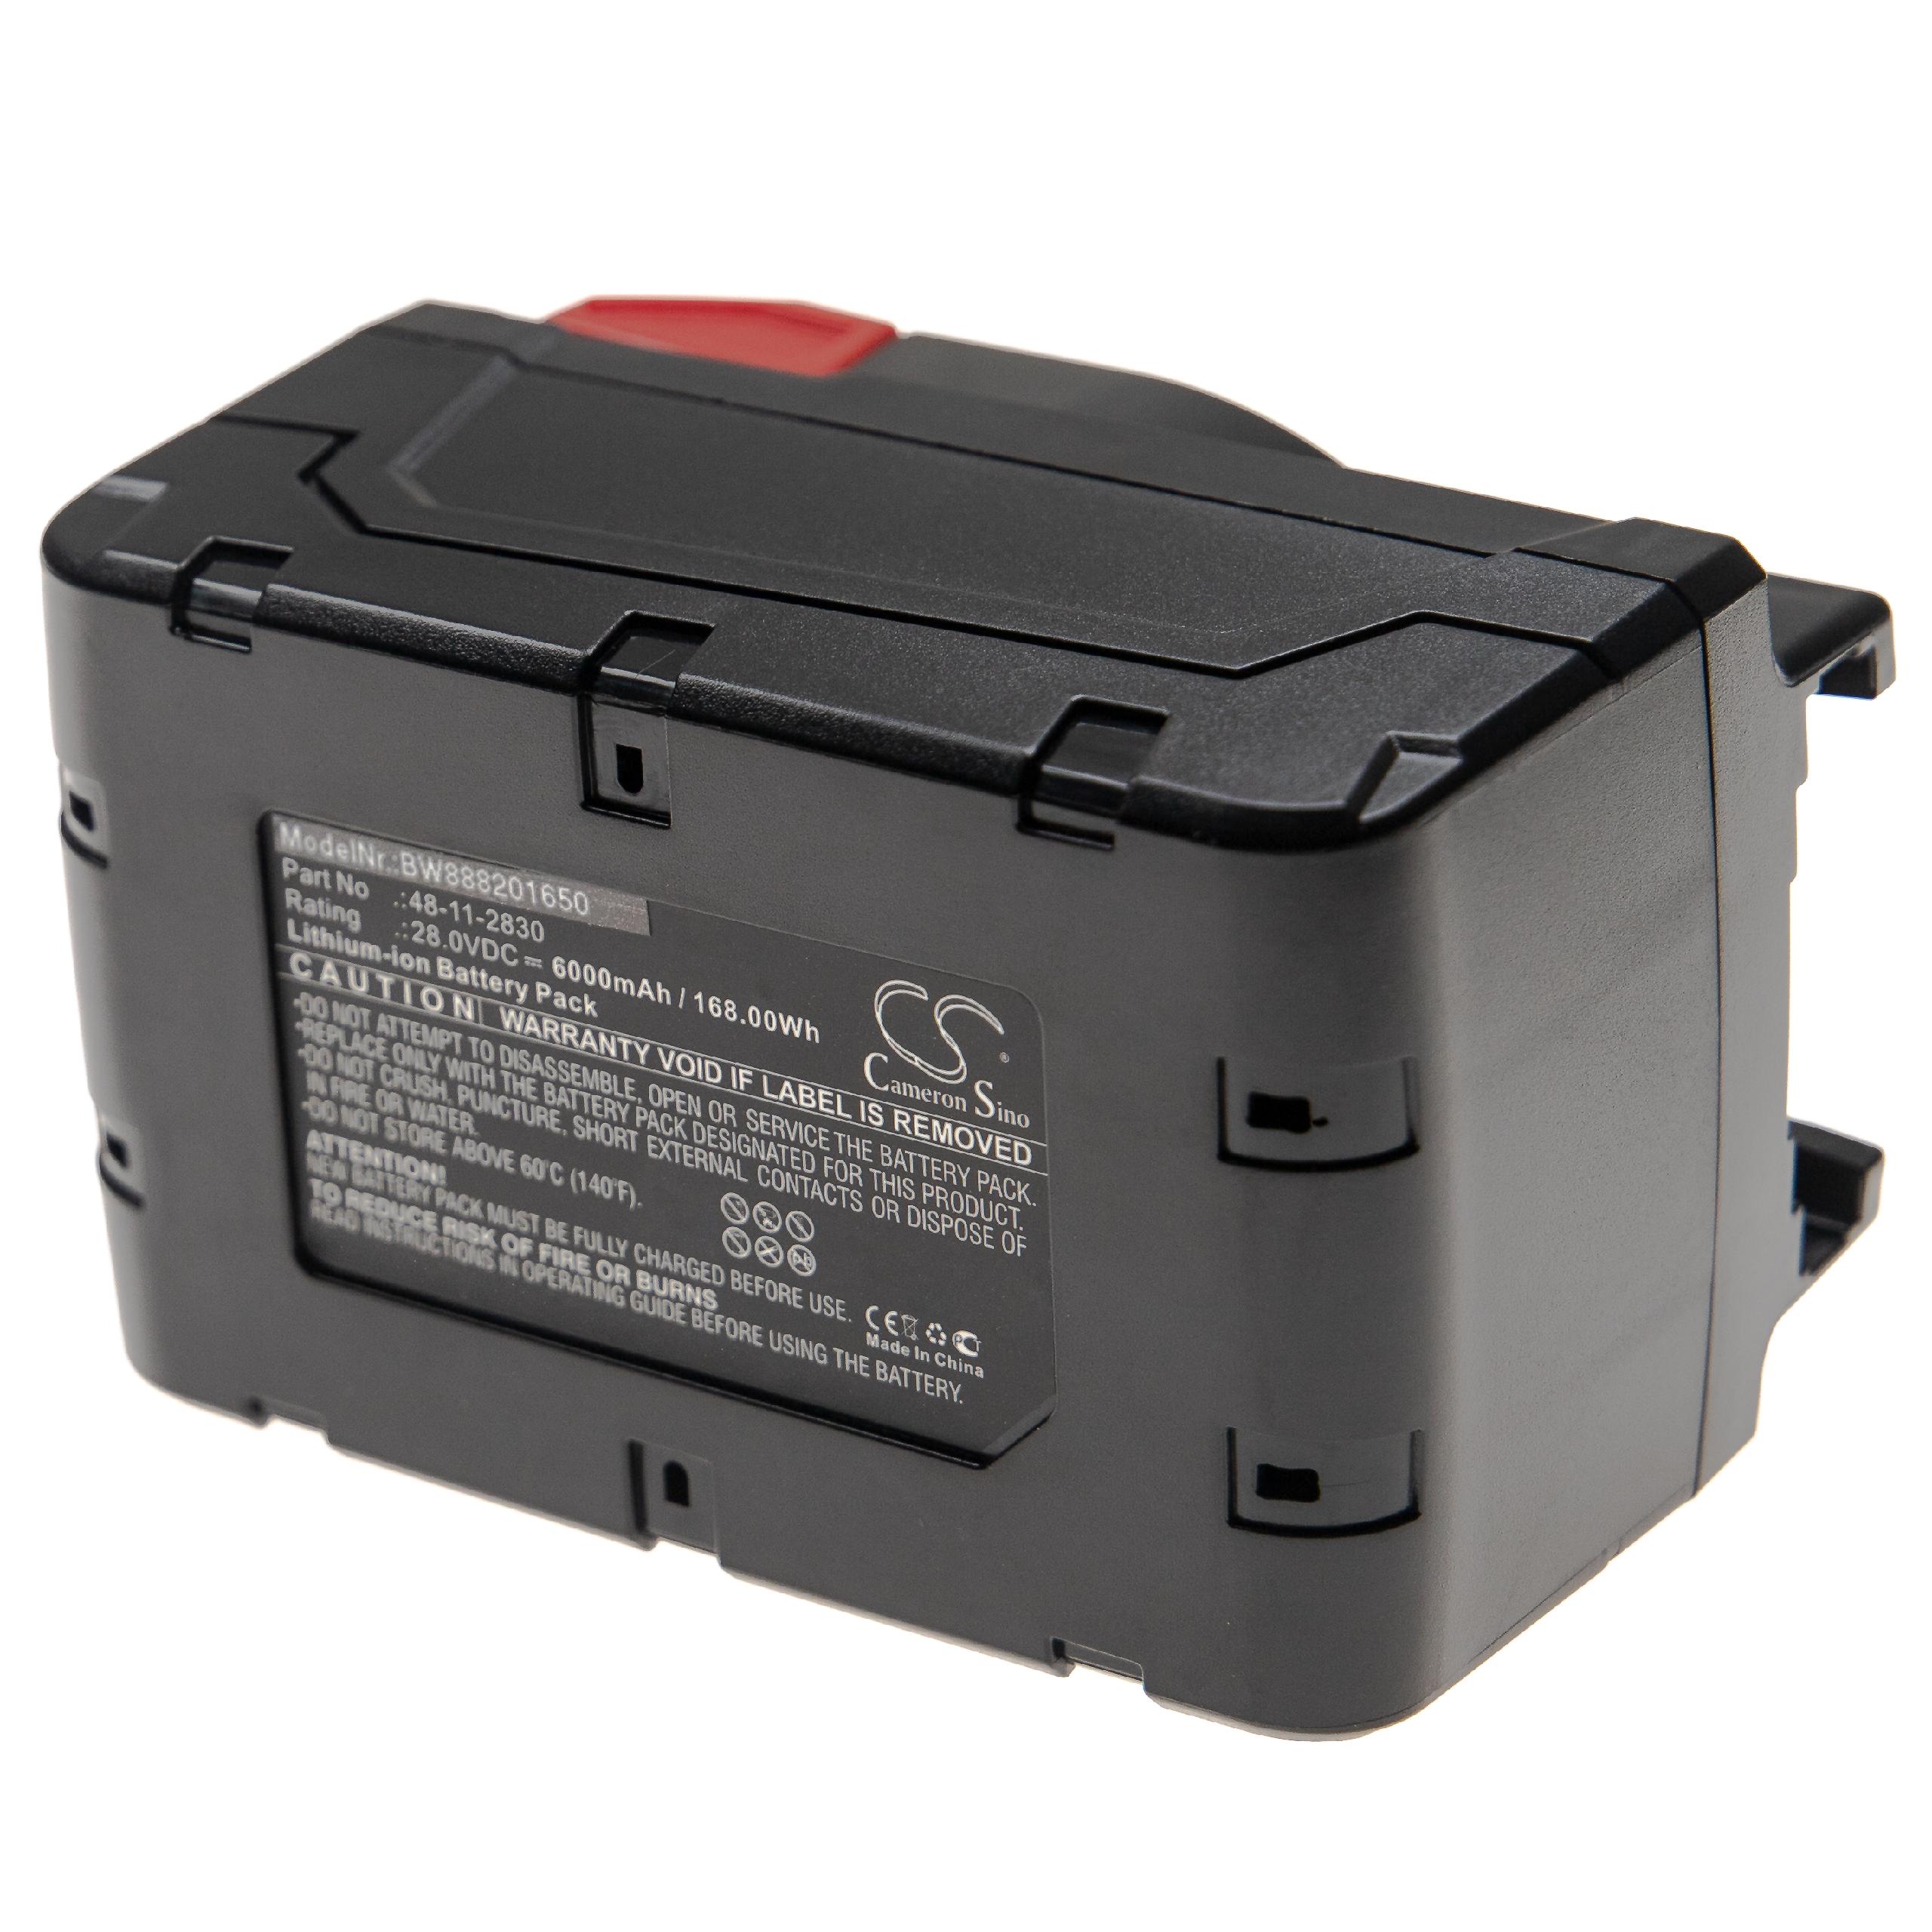 Batería reemplaza AEG / Milwaukee 48-11-2830, 48-11-2850, 48-11-1830 para herramienta - 6000 mAh, 28 V, Li-Ion